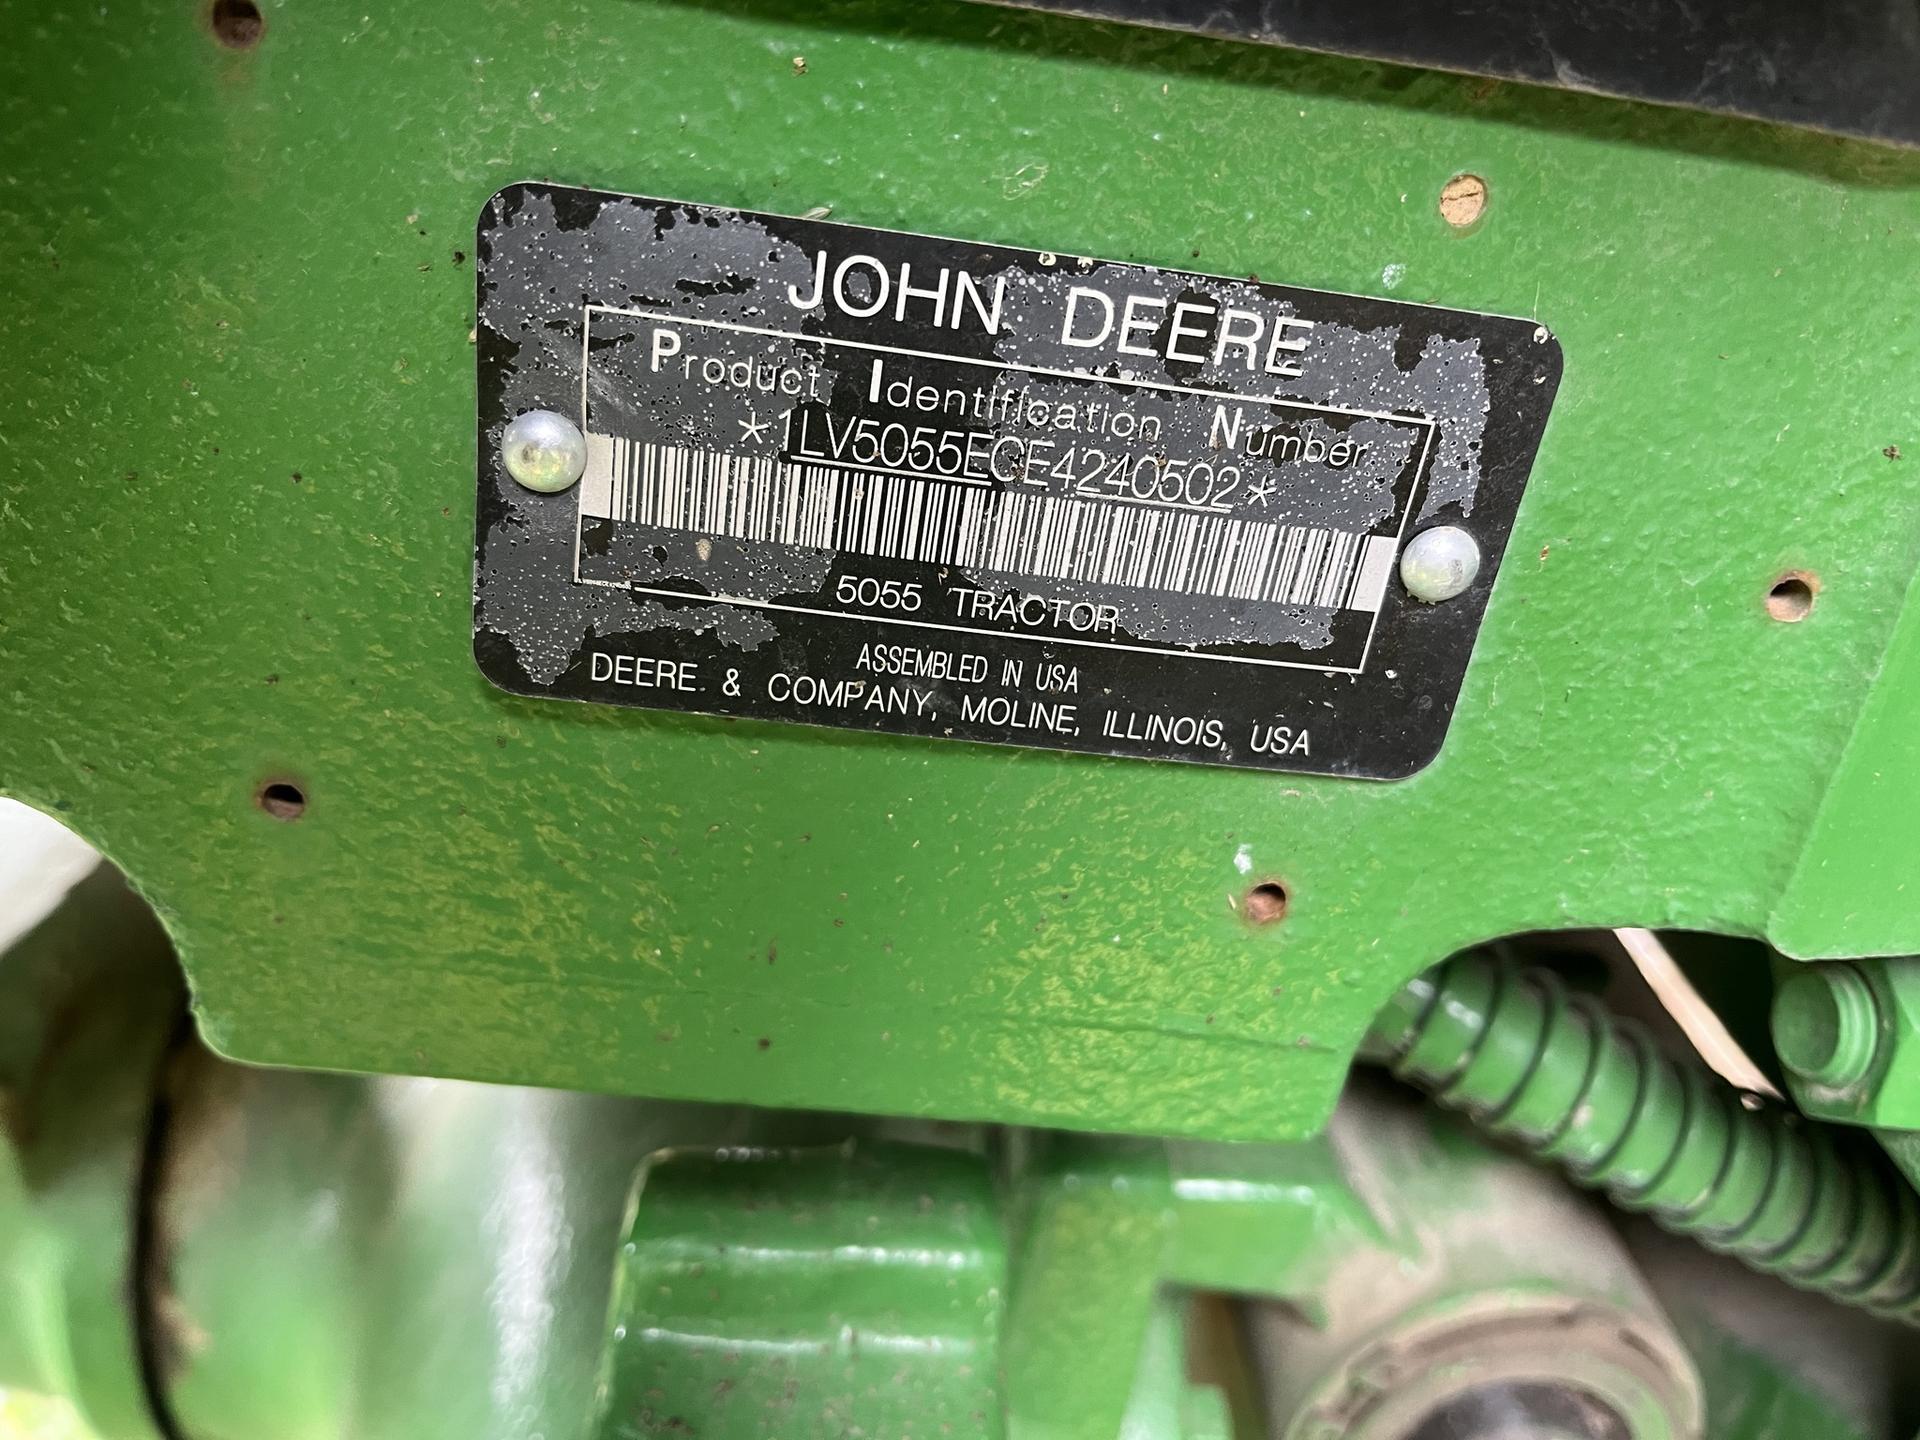 2014 John Deere 5055E